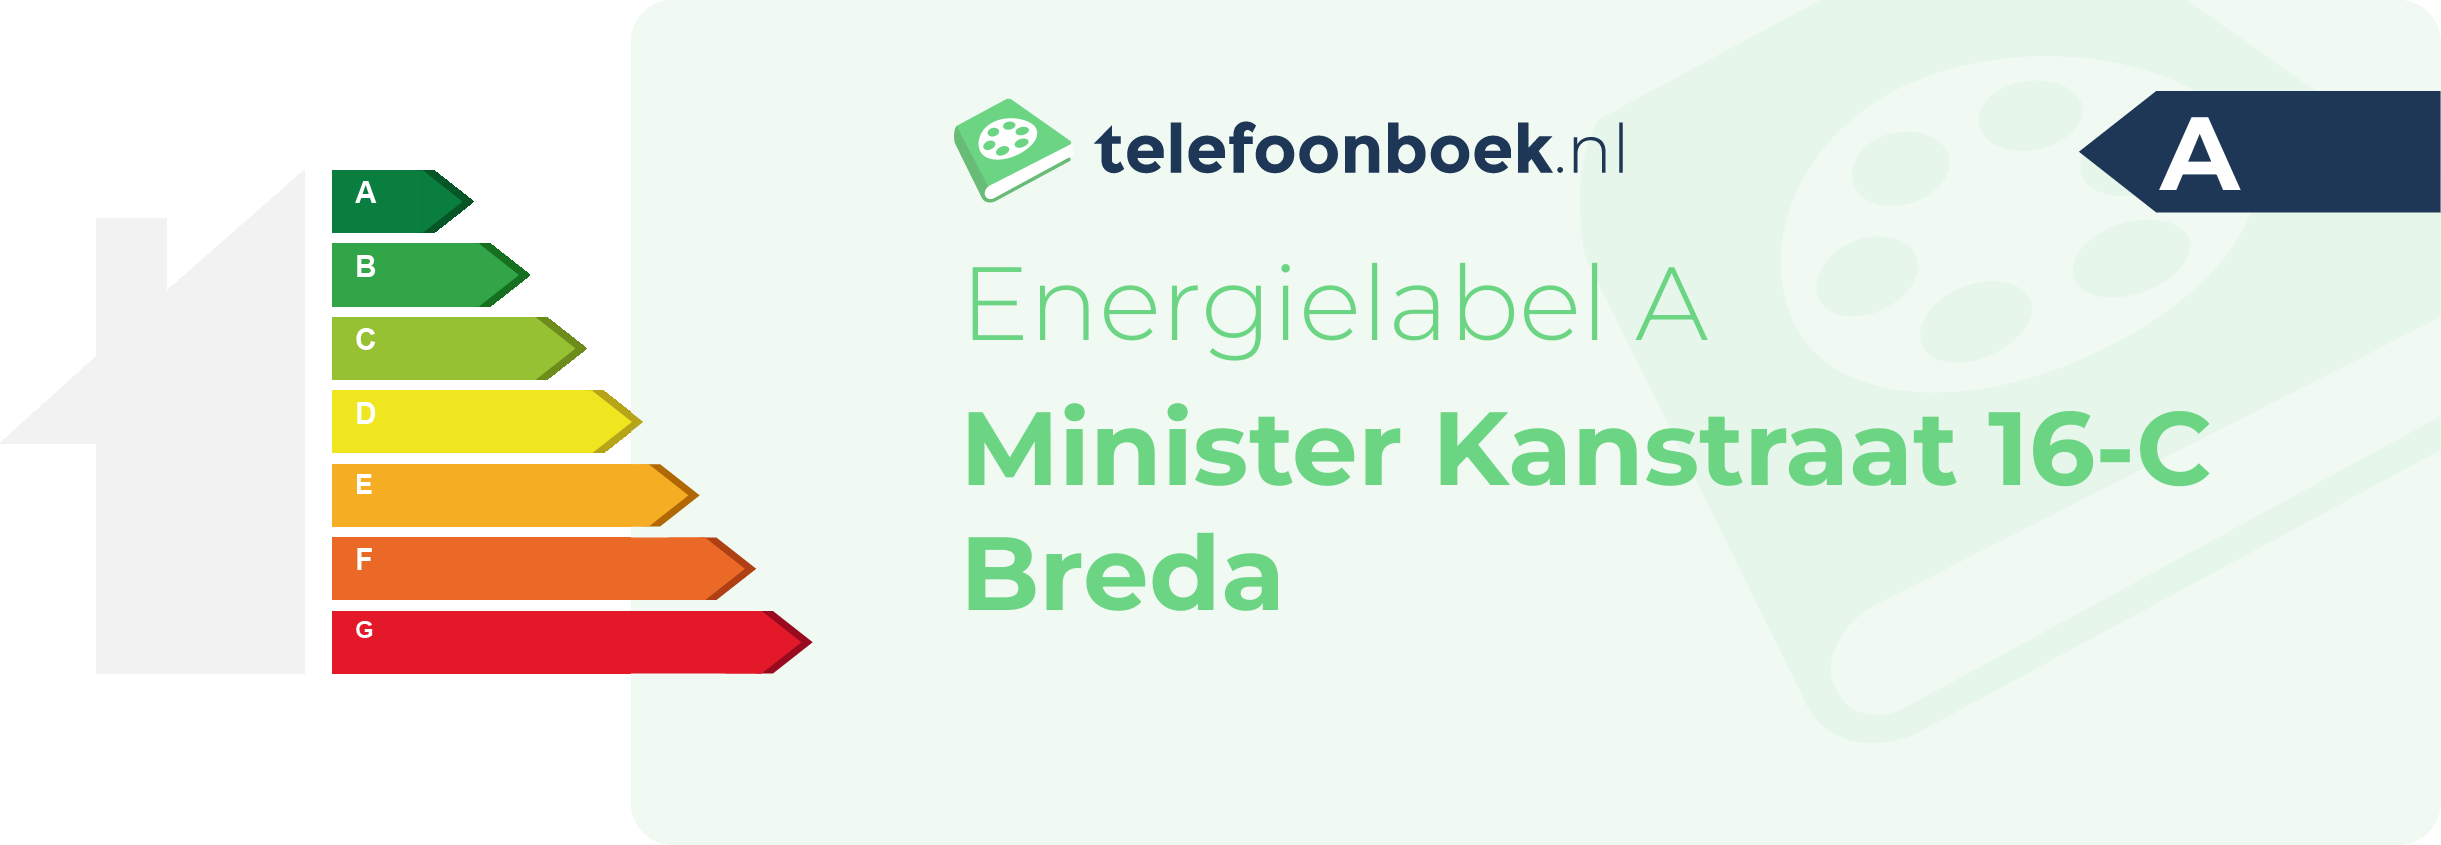 Energielabel Minister Kanstraat 16-C Breda